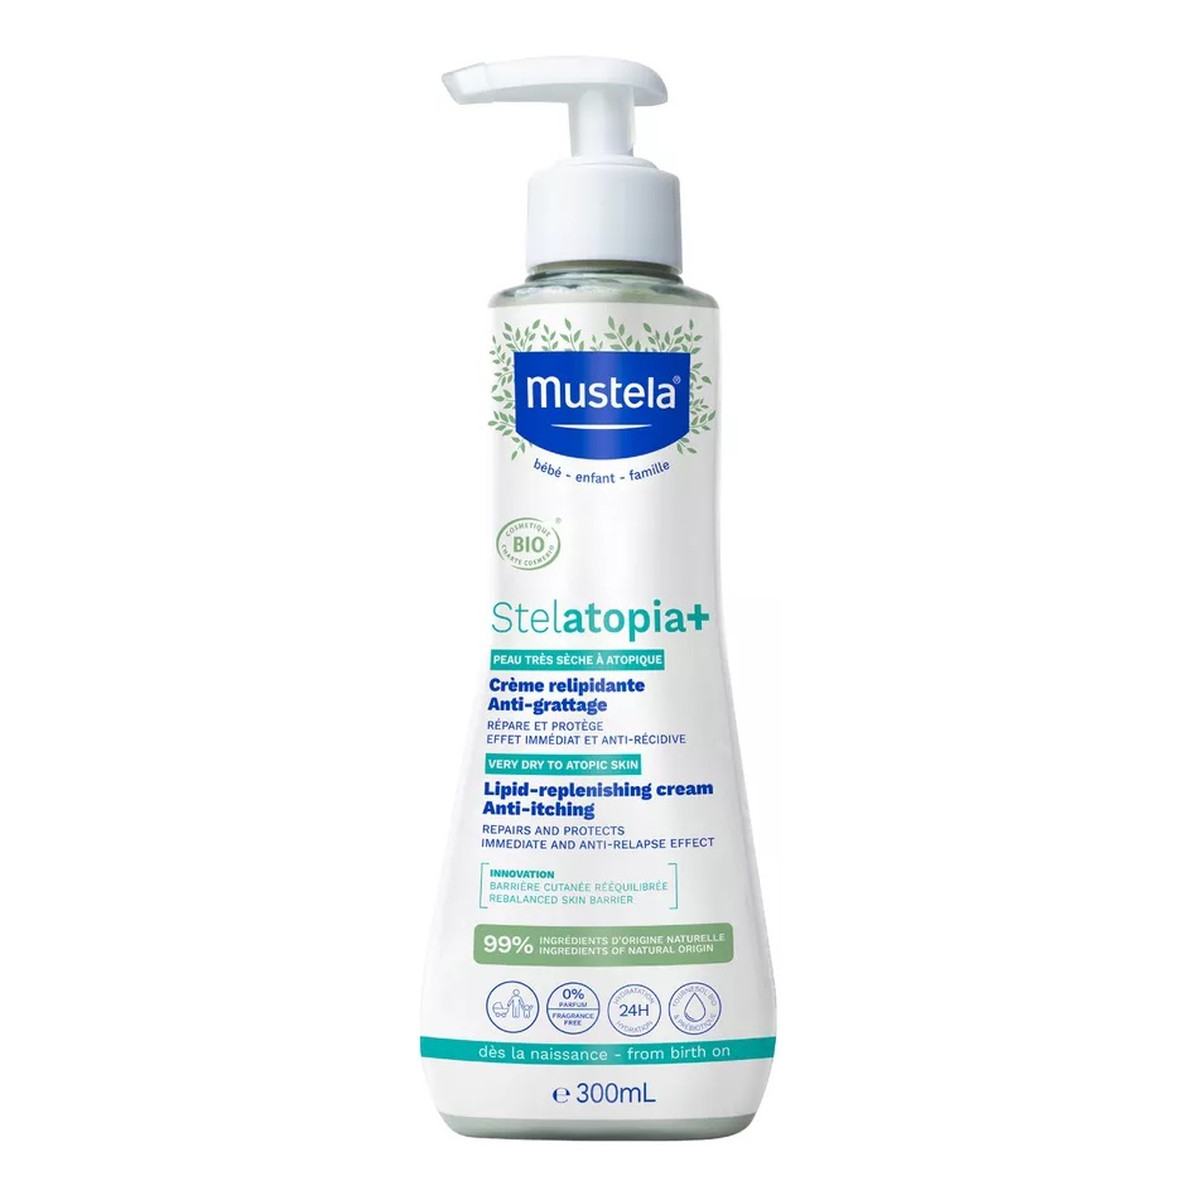 Mustela Stelatopia+ Lipid-Replenishing Cream Krem uzupełniający lipidy 300ml